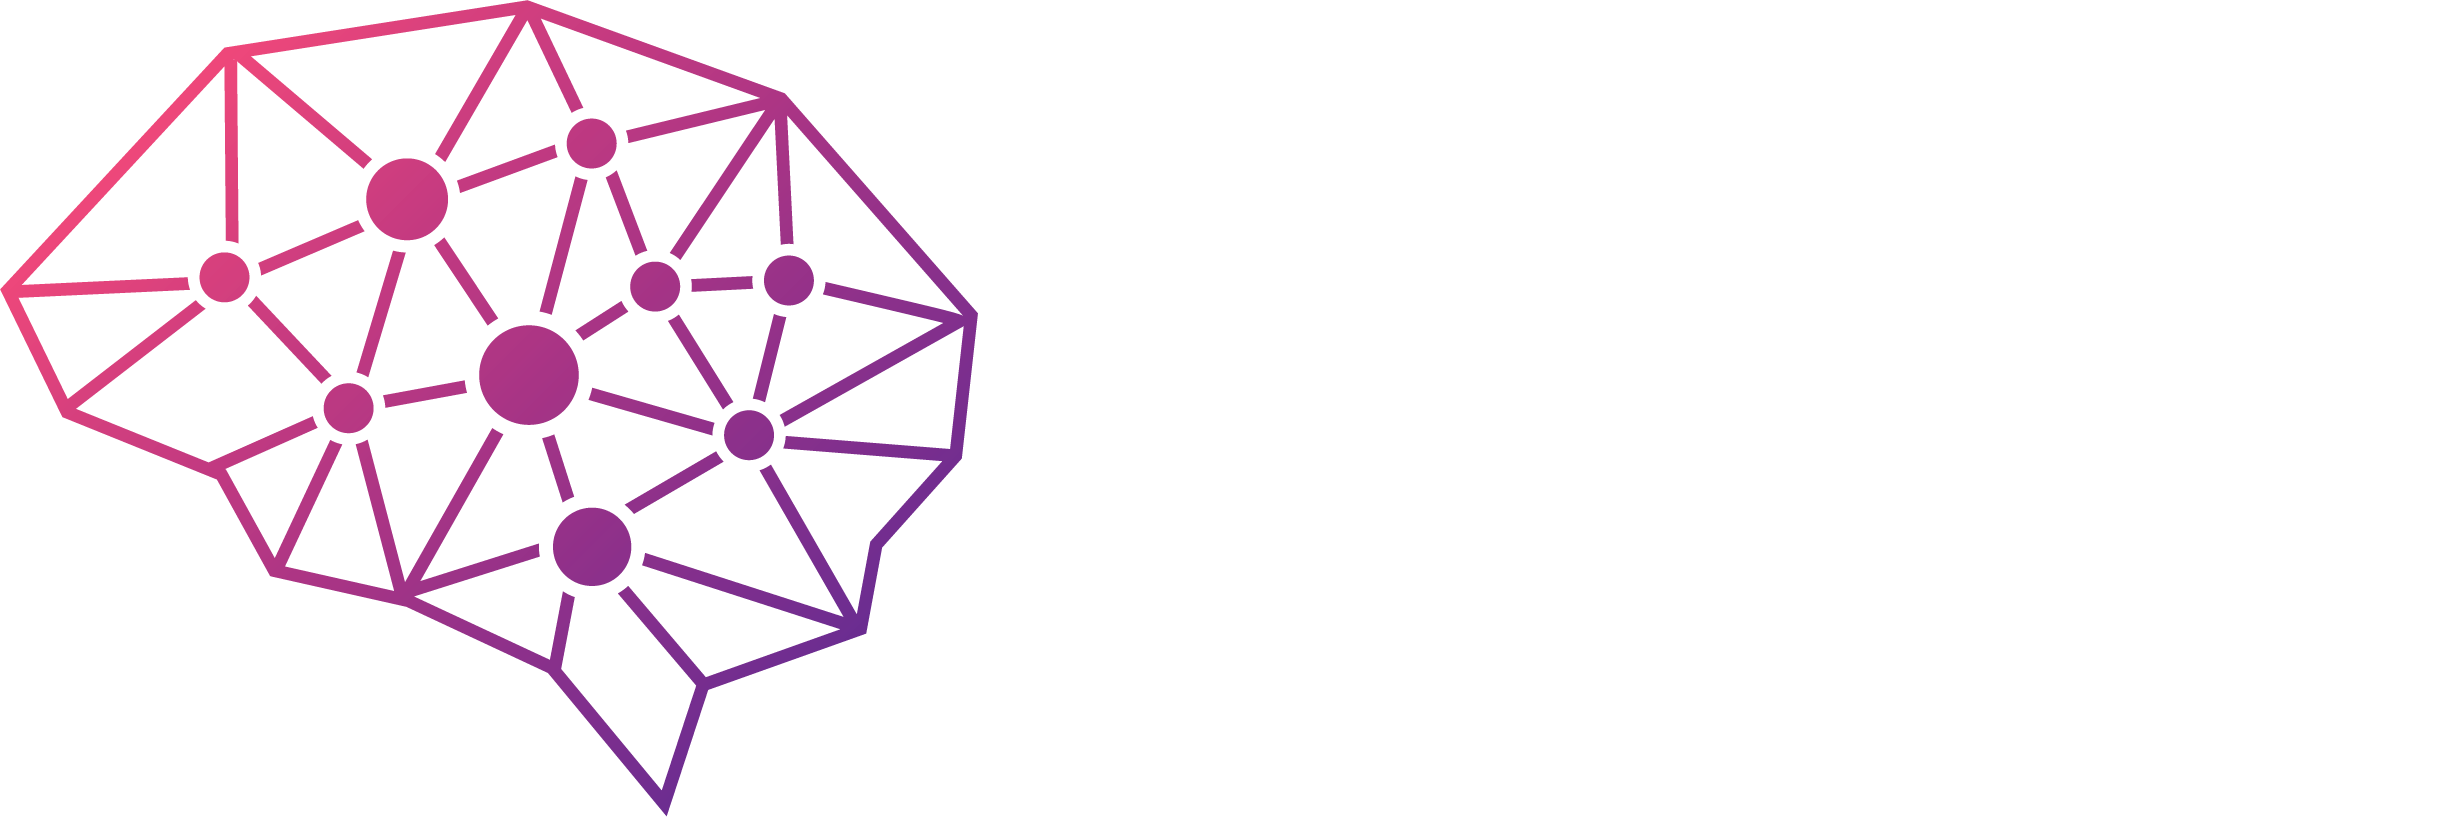 C9 Staff Logo